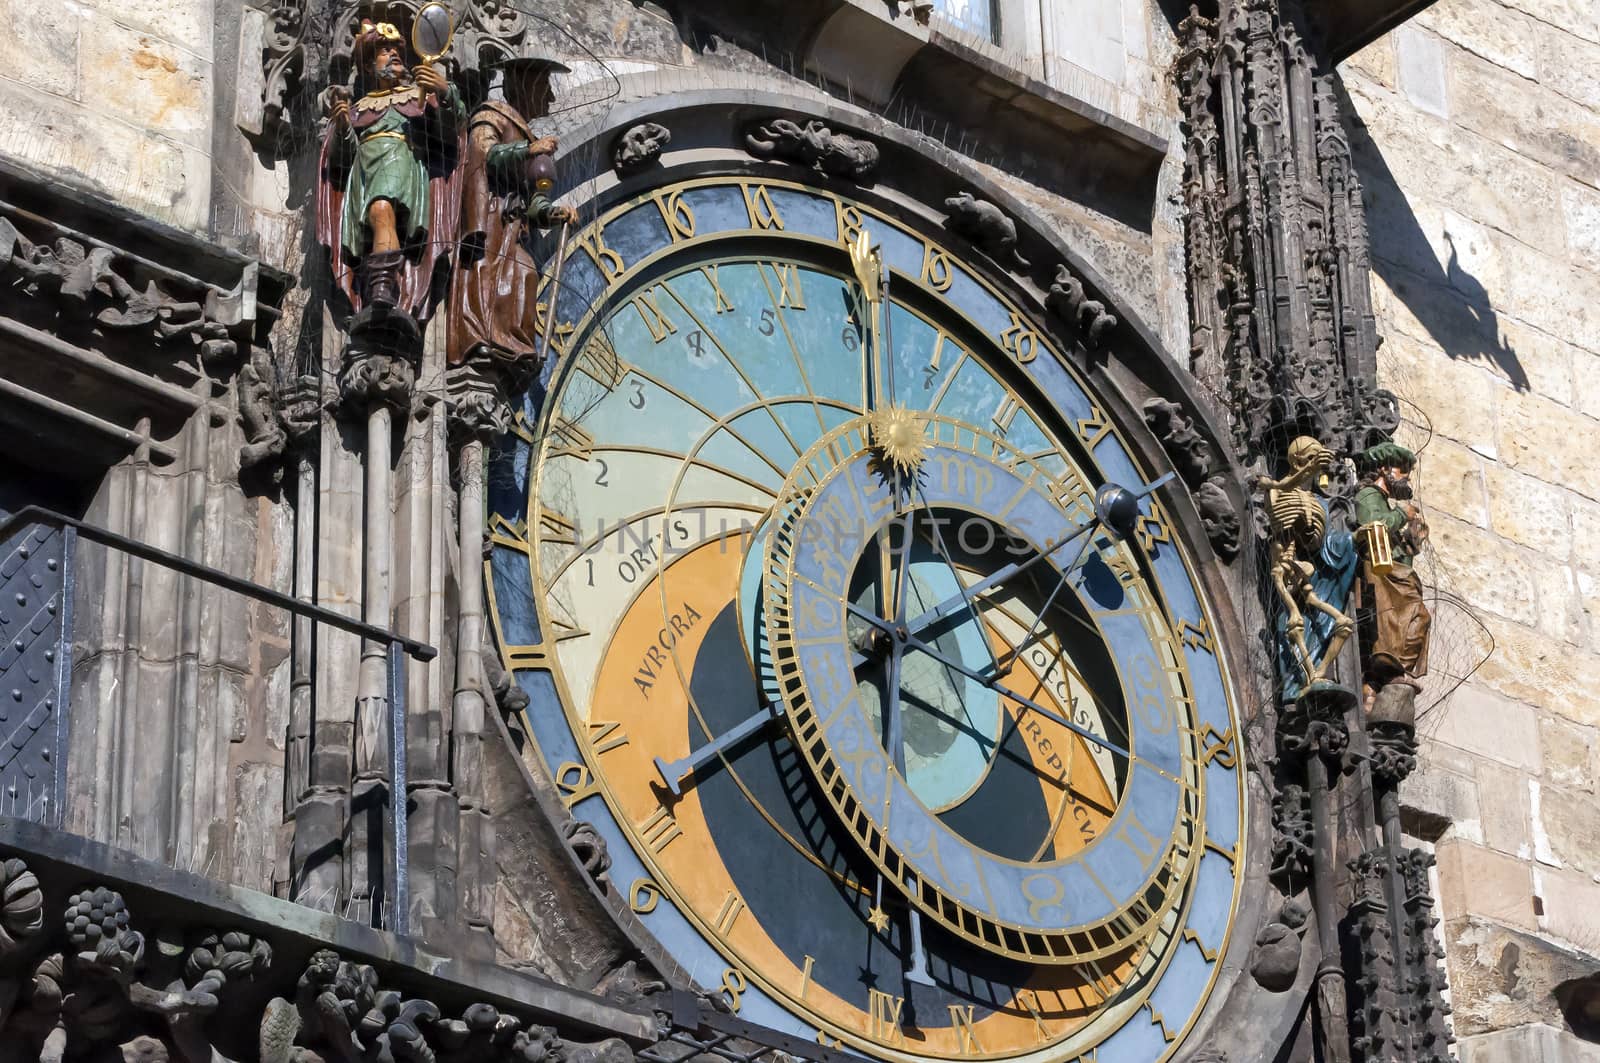 Close up view of the astronomical clock of Prague, Czech Republic.